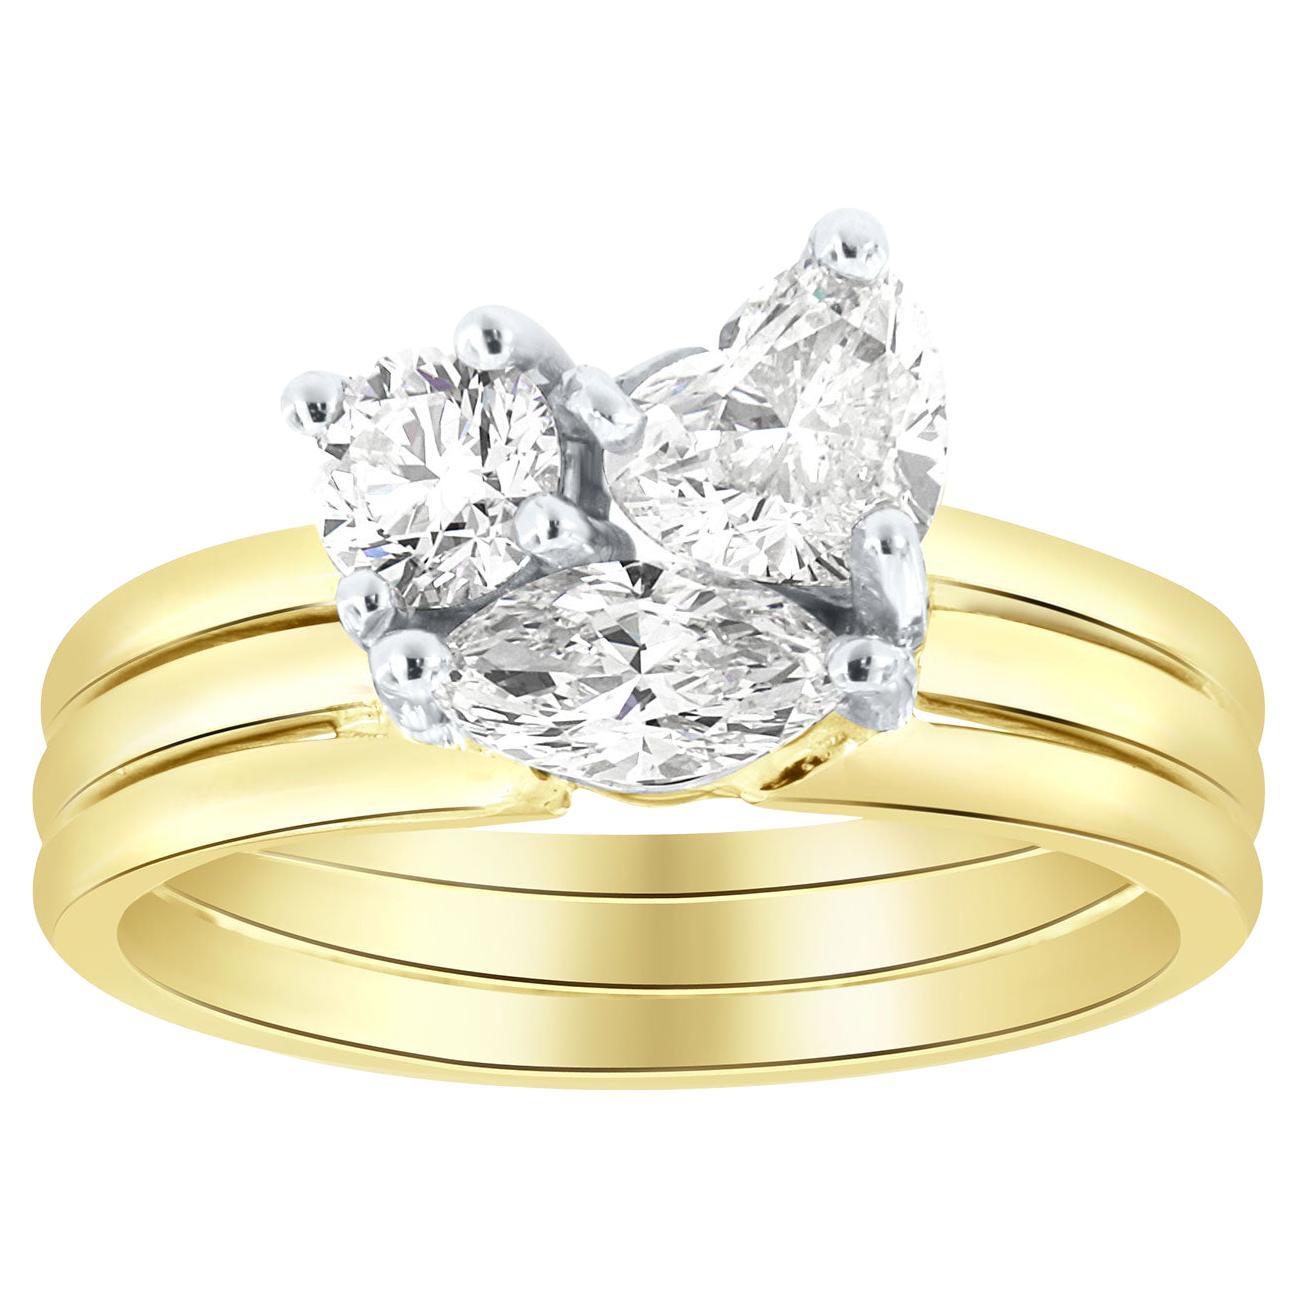 14K Yello& White Gold Mix Shapes GIA Certified Designer Diamond Ring 1.25 CT. TW For Sale